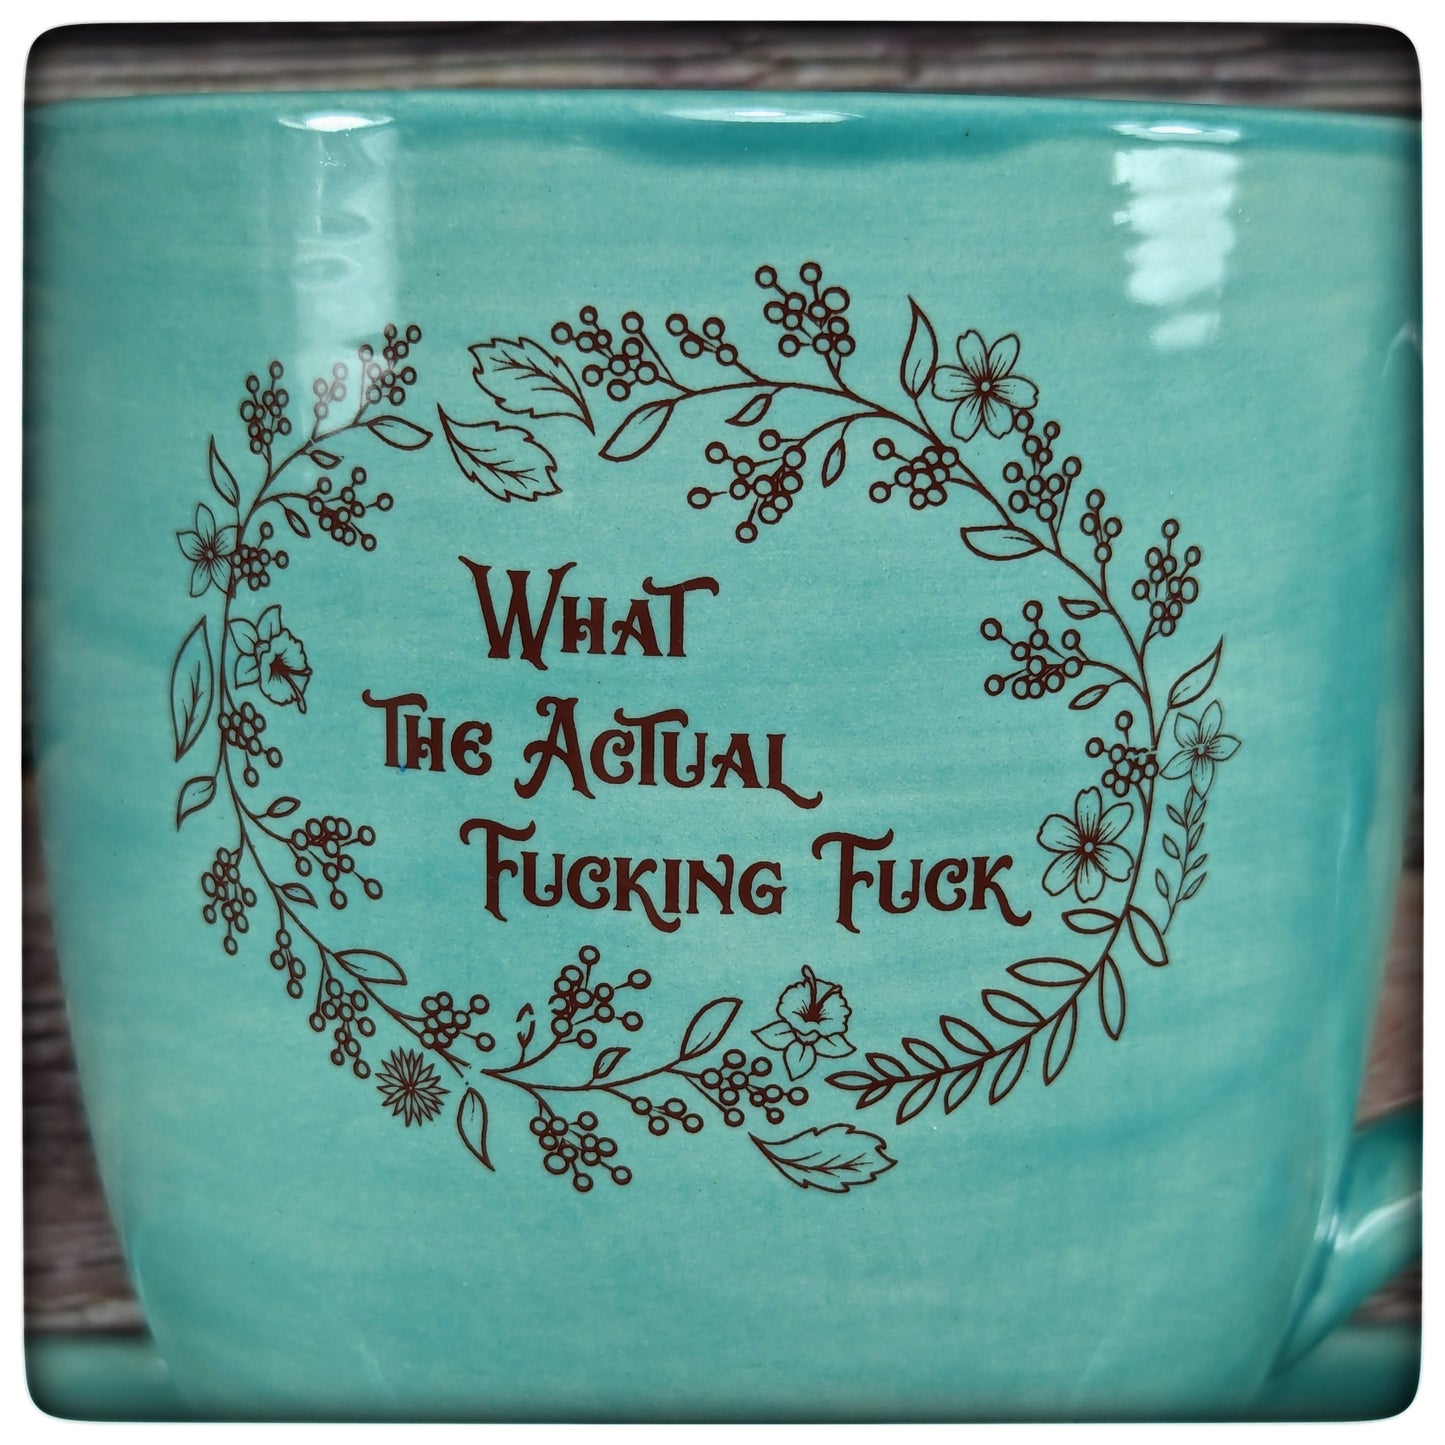 "What the Actual" Mug